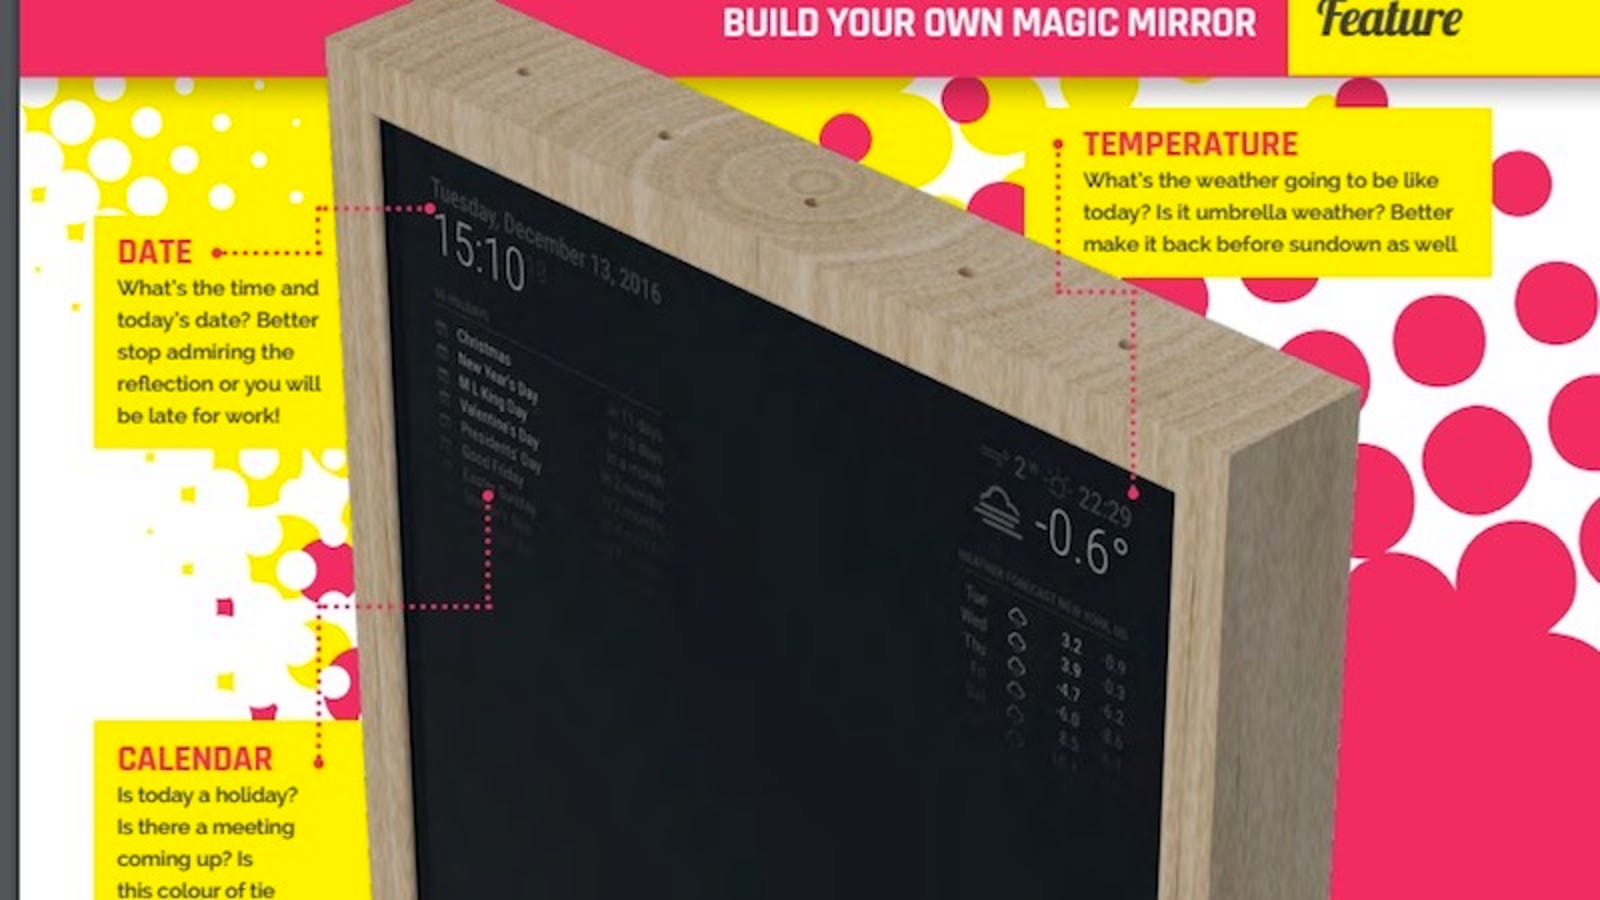 magic mirror raspberry pi making modules